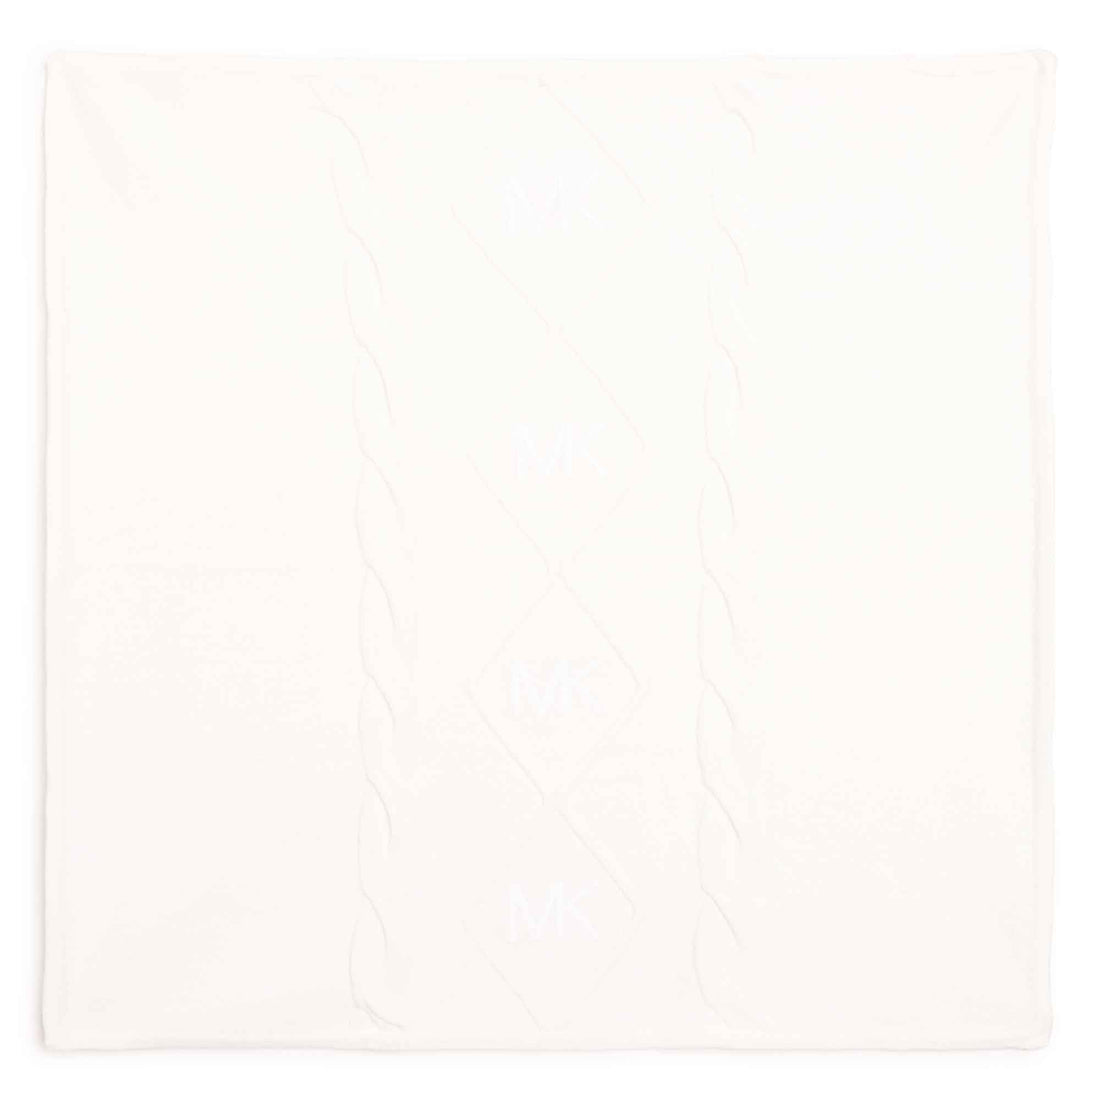 Michael Kors Blanket Style: R90029